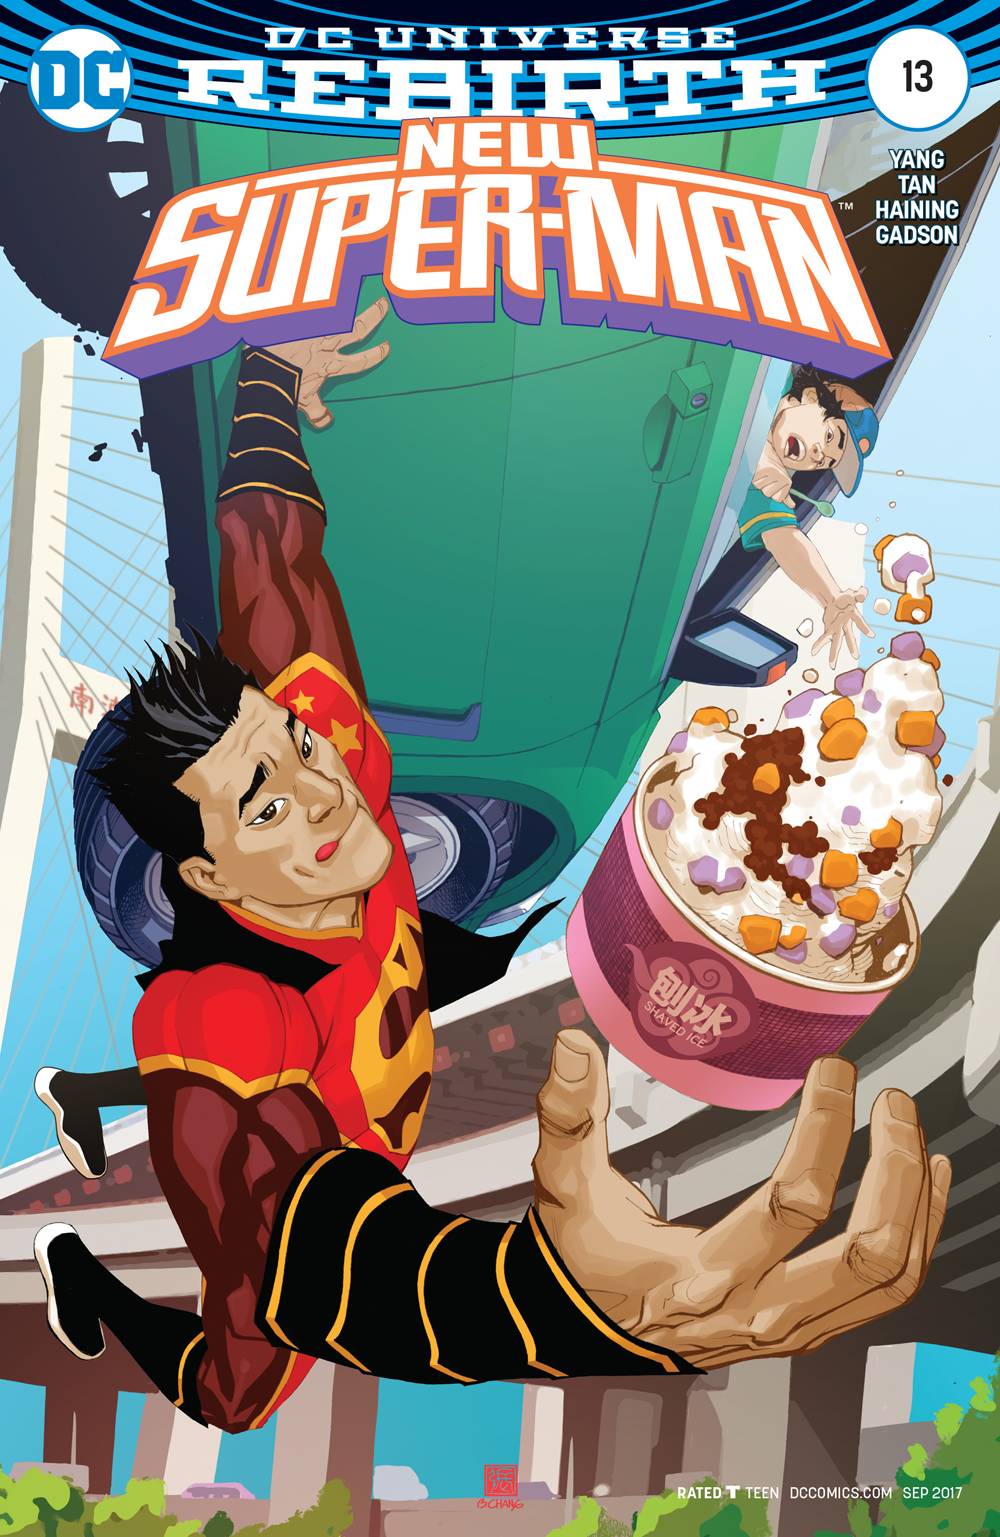 New Super Man #13 Variant Edition